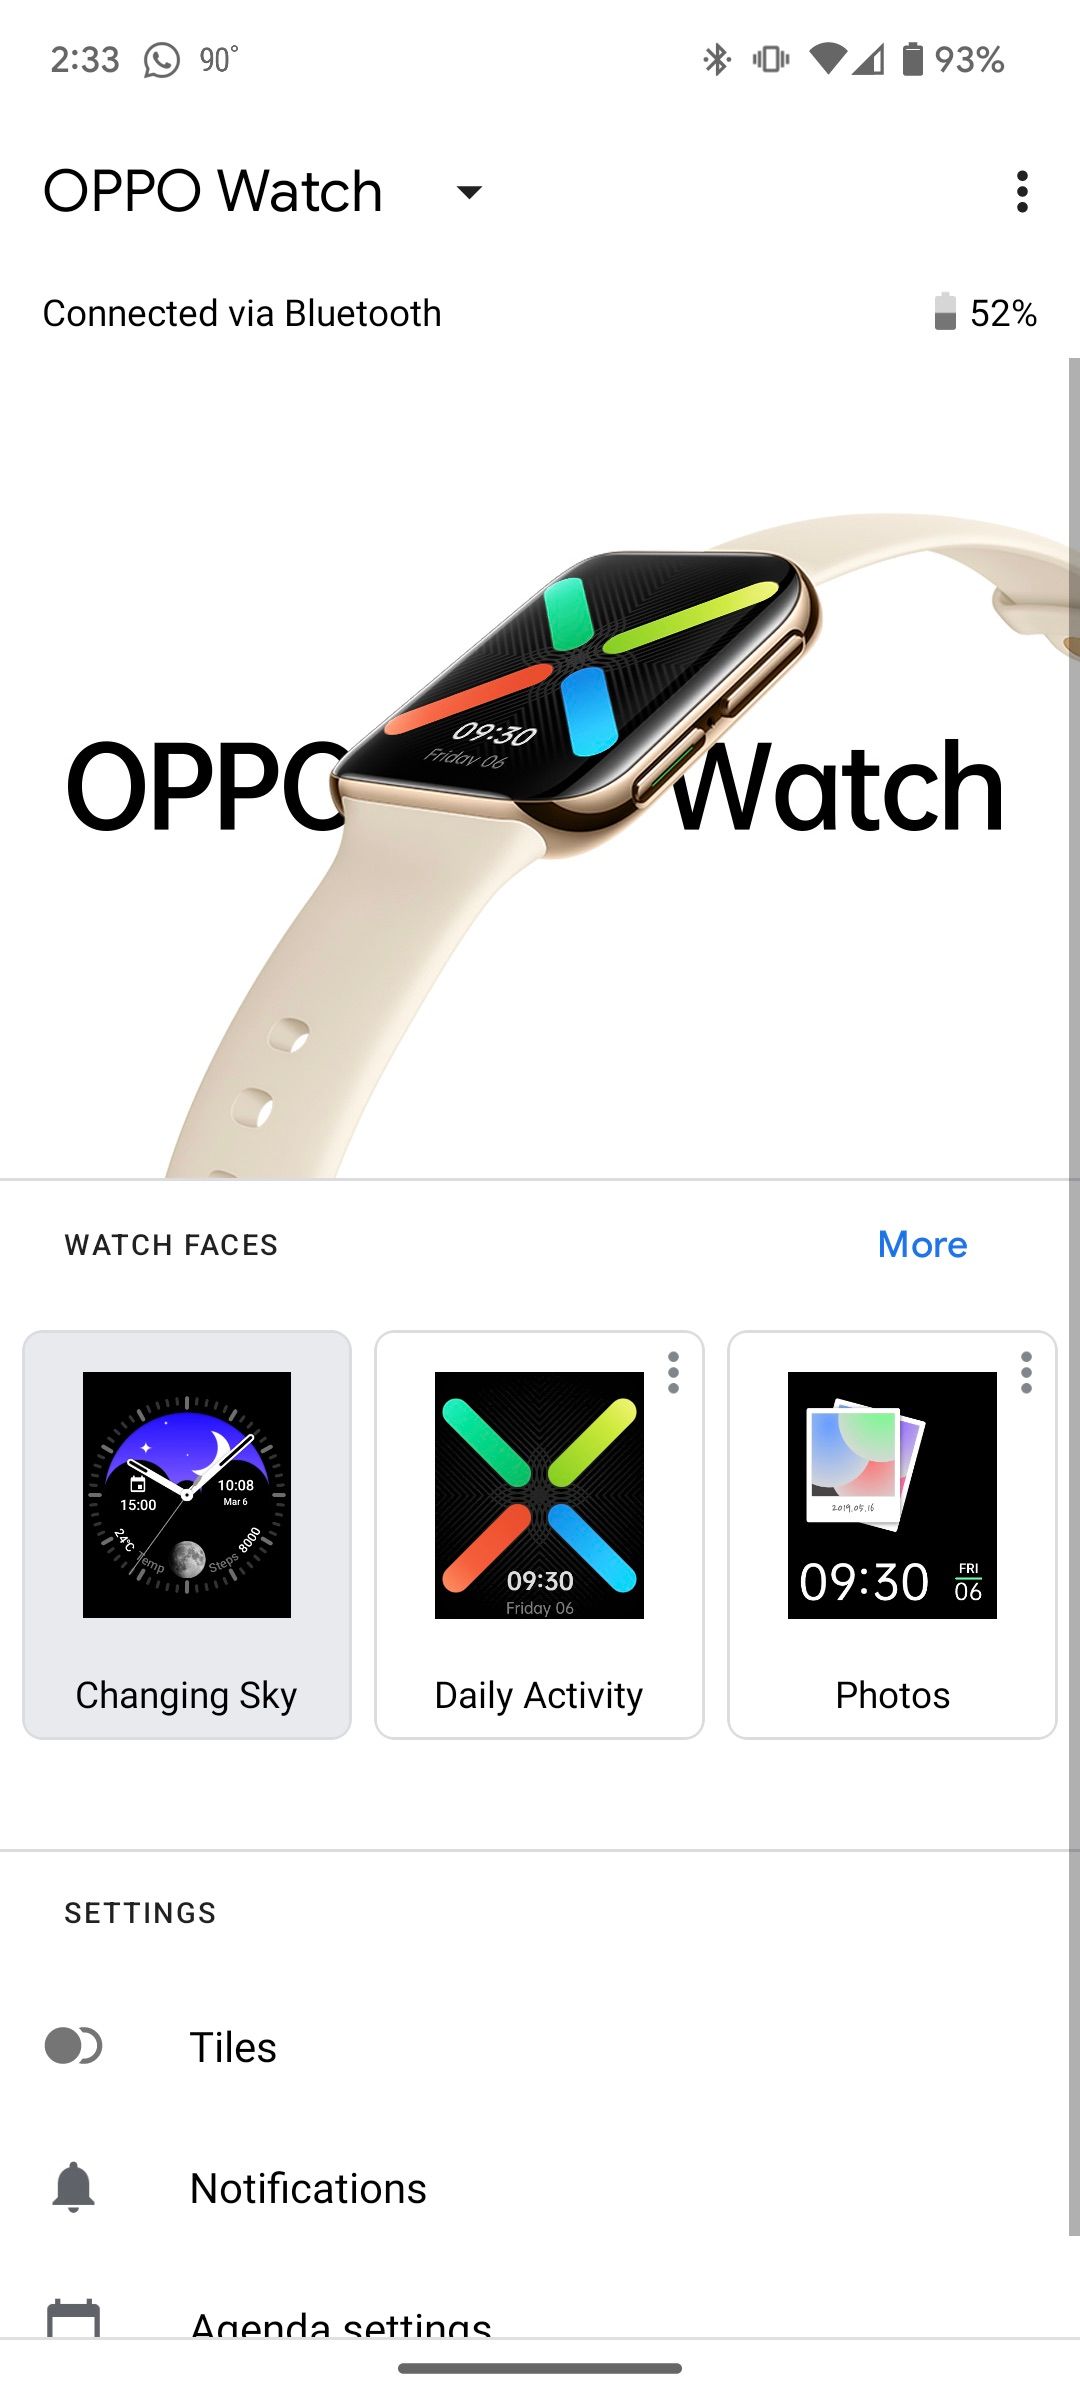 Use o aplicativo de telefone complementar do OS 2 com o Oppo Watch conectado